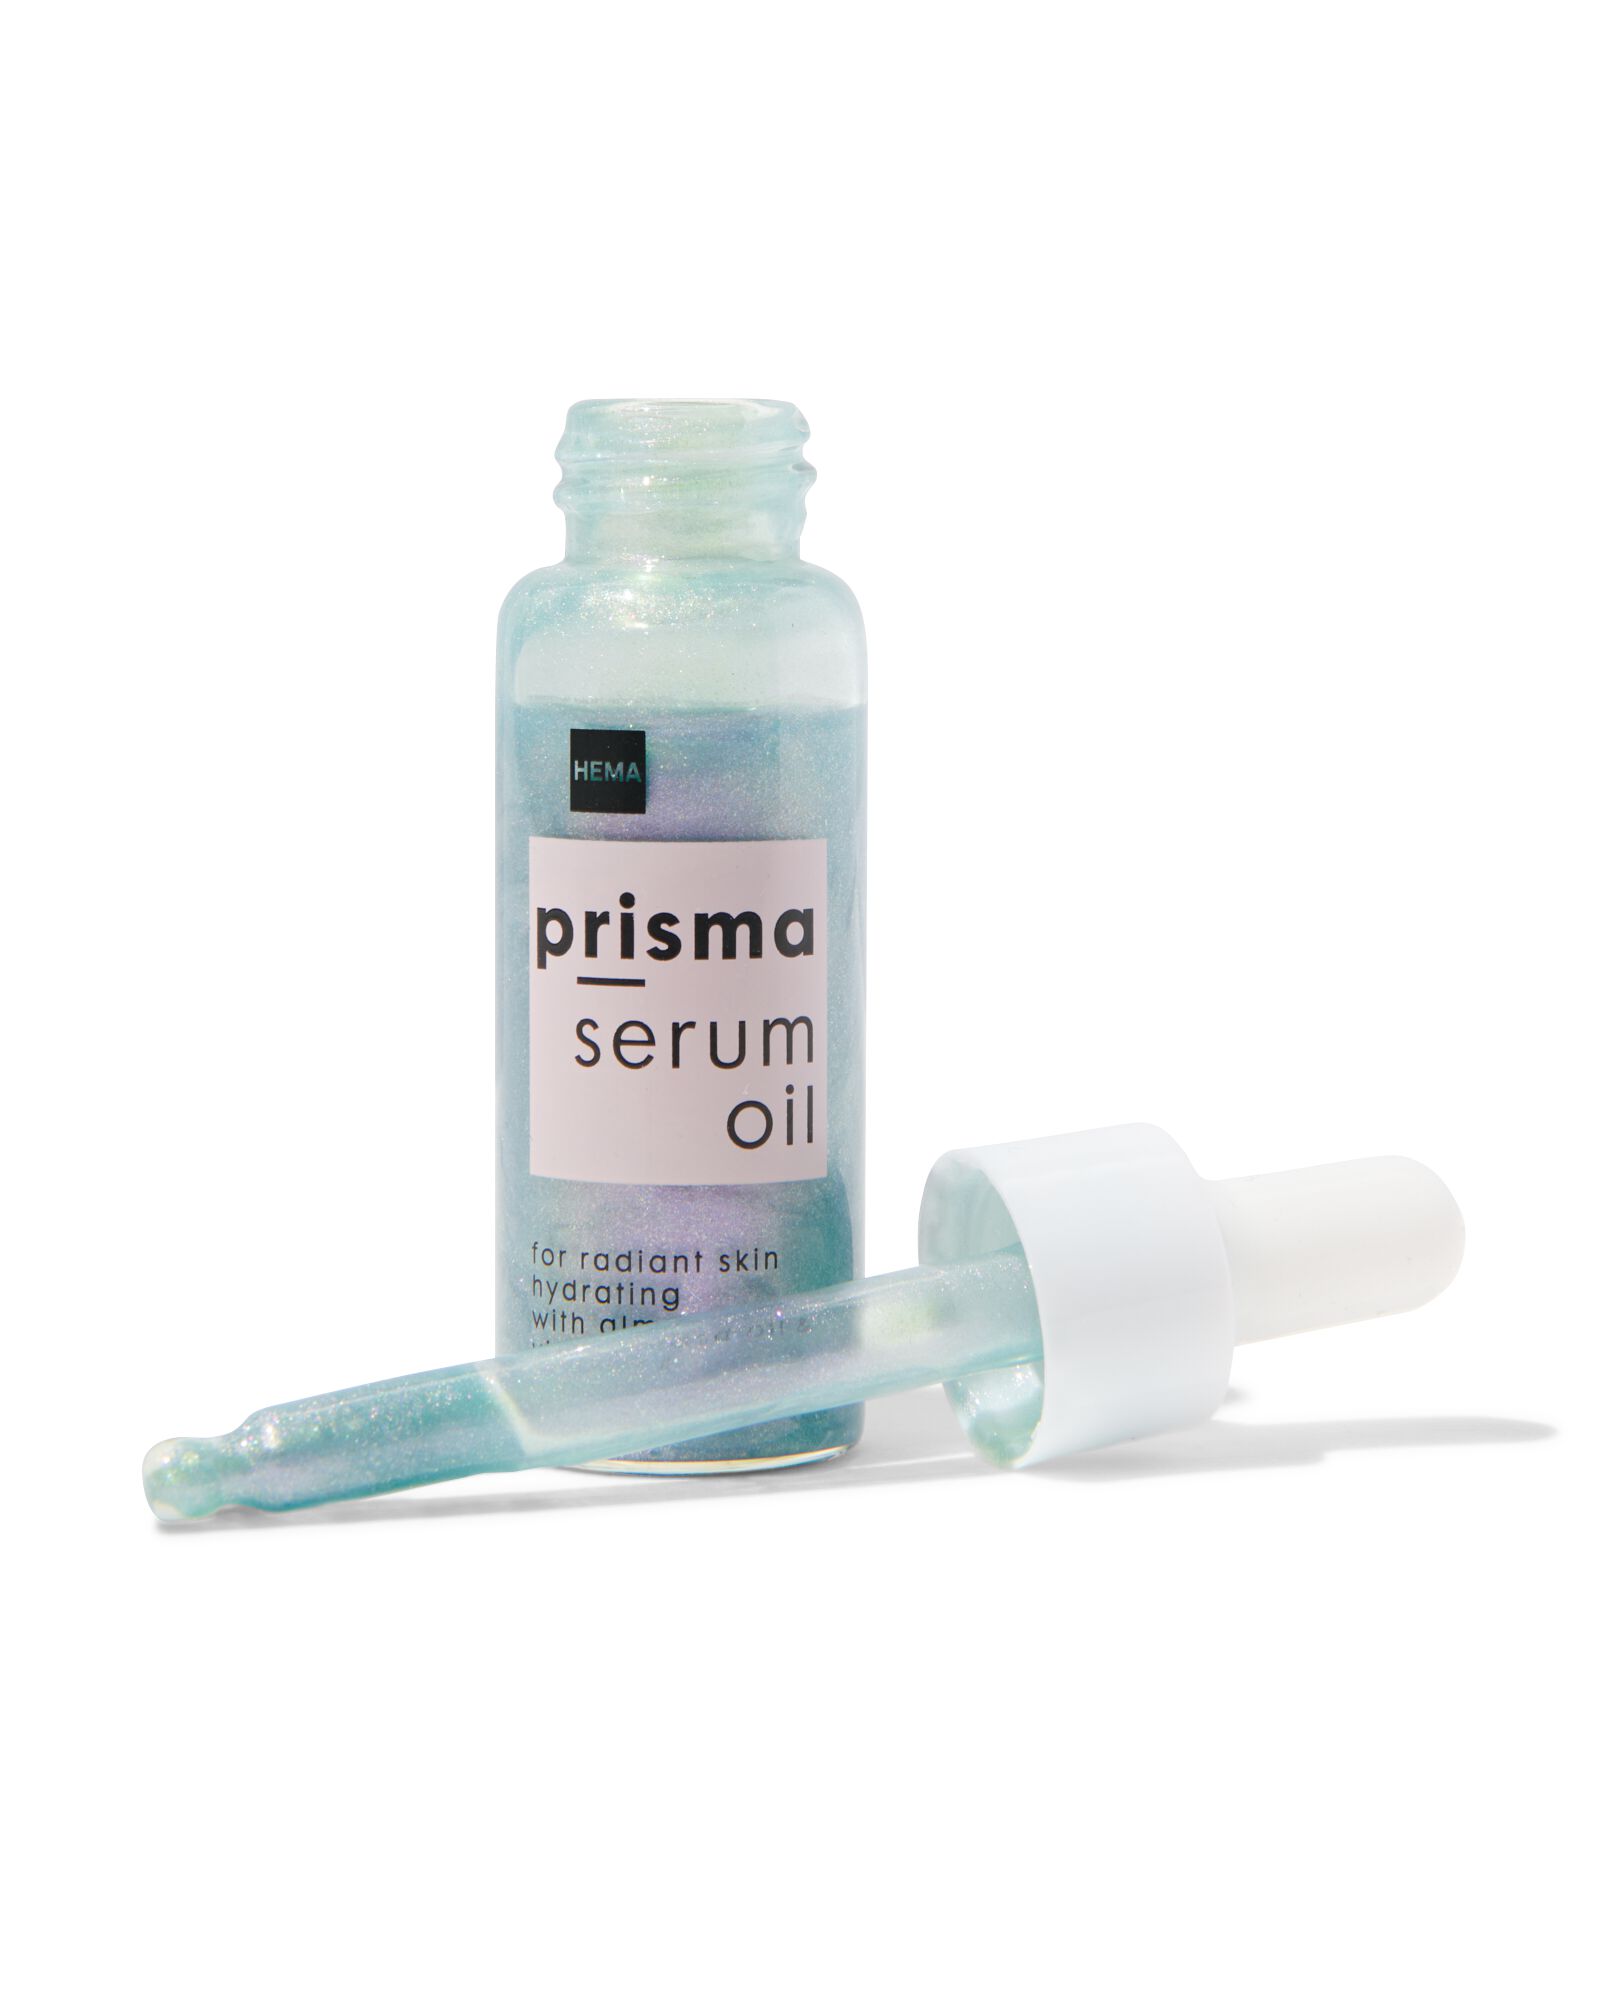 prisma serum olie 20ml - 17790115 - HEMA